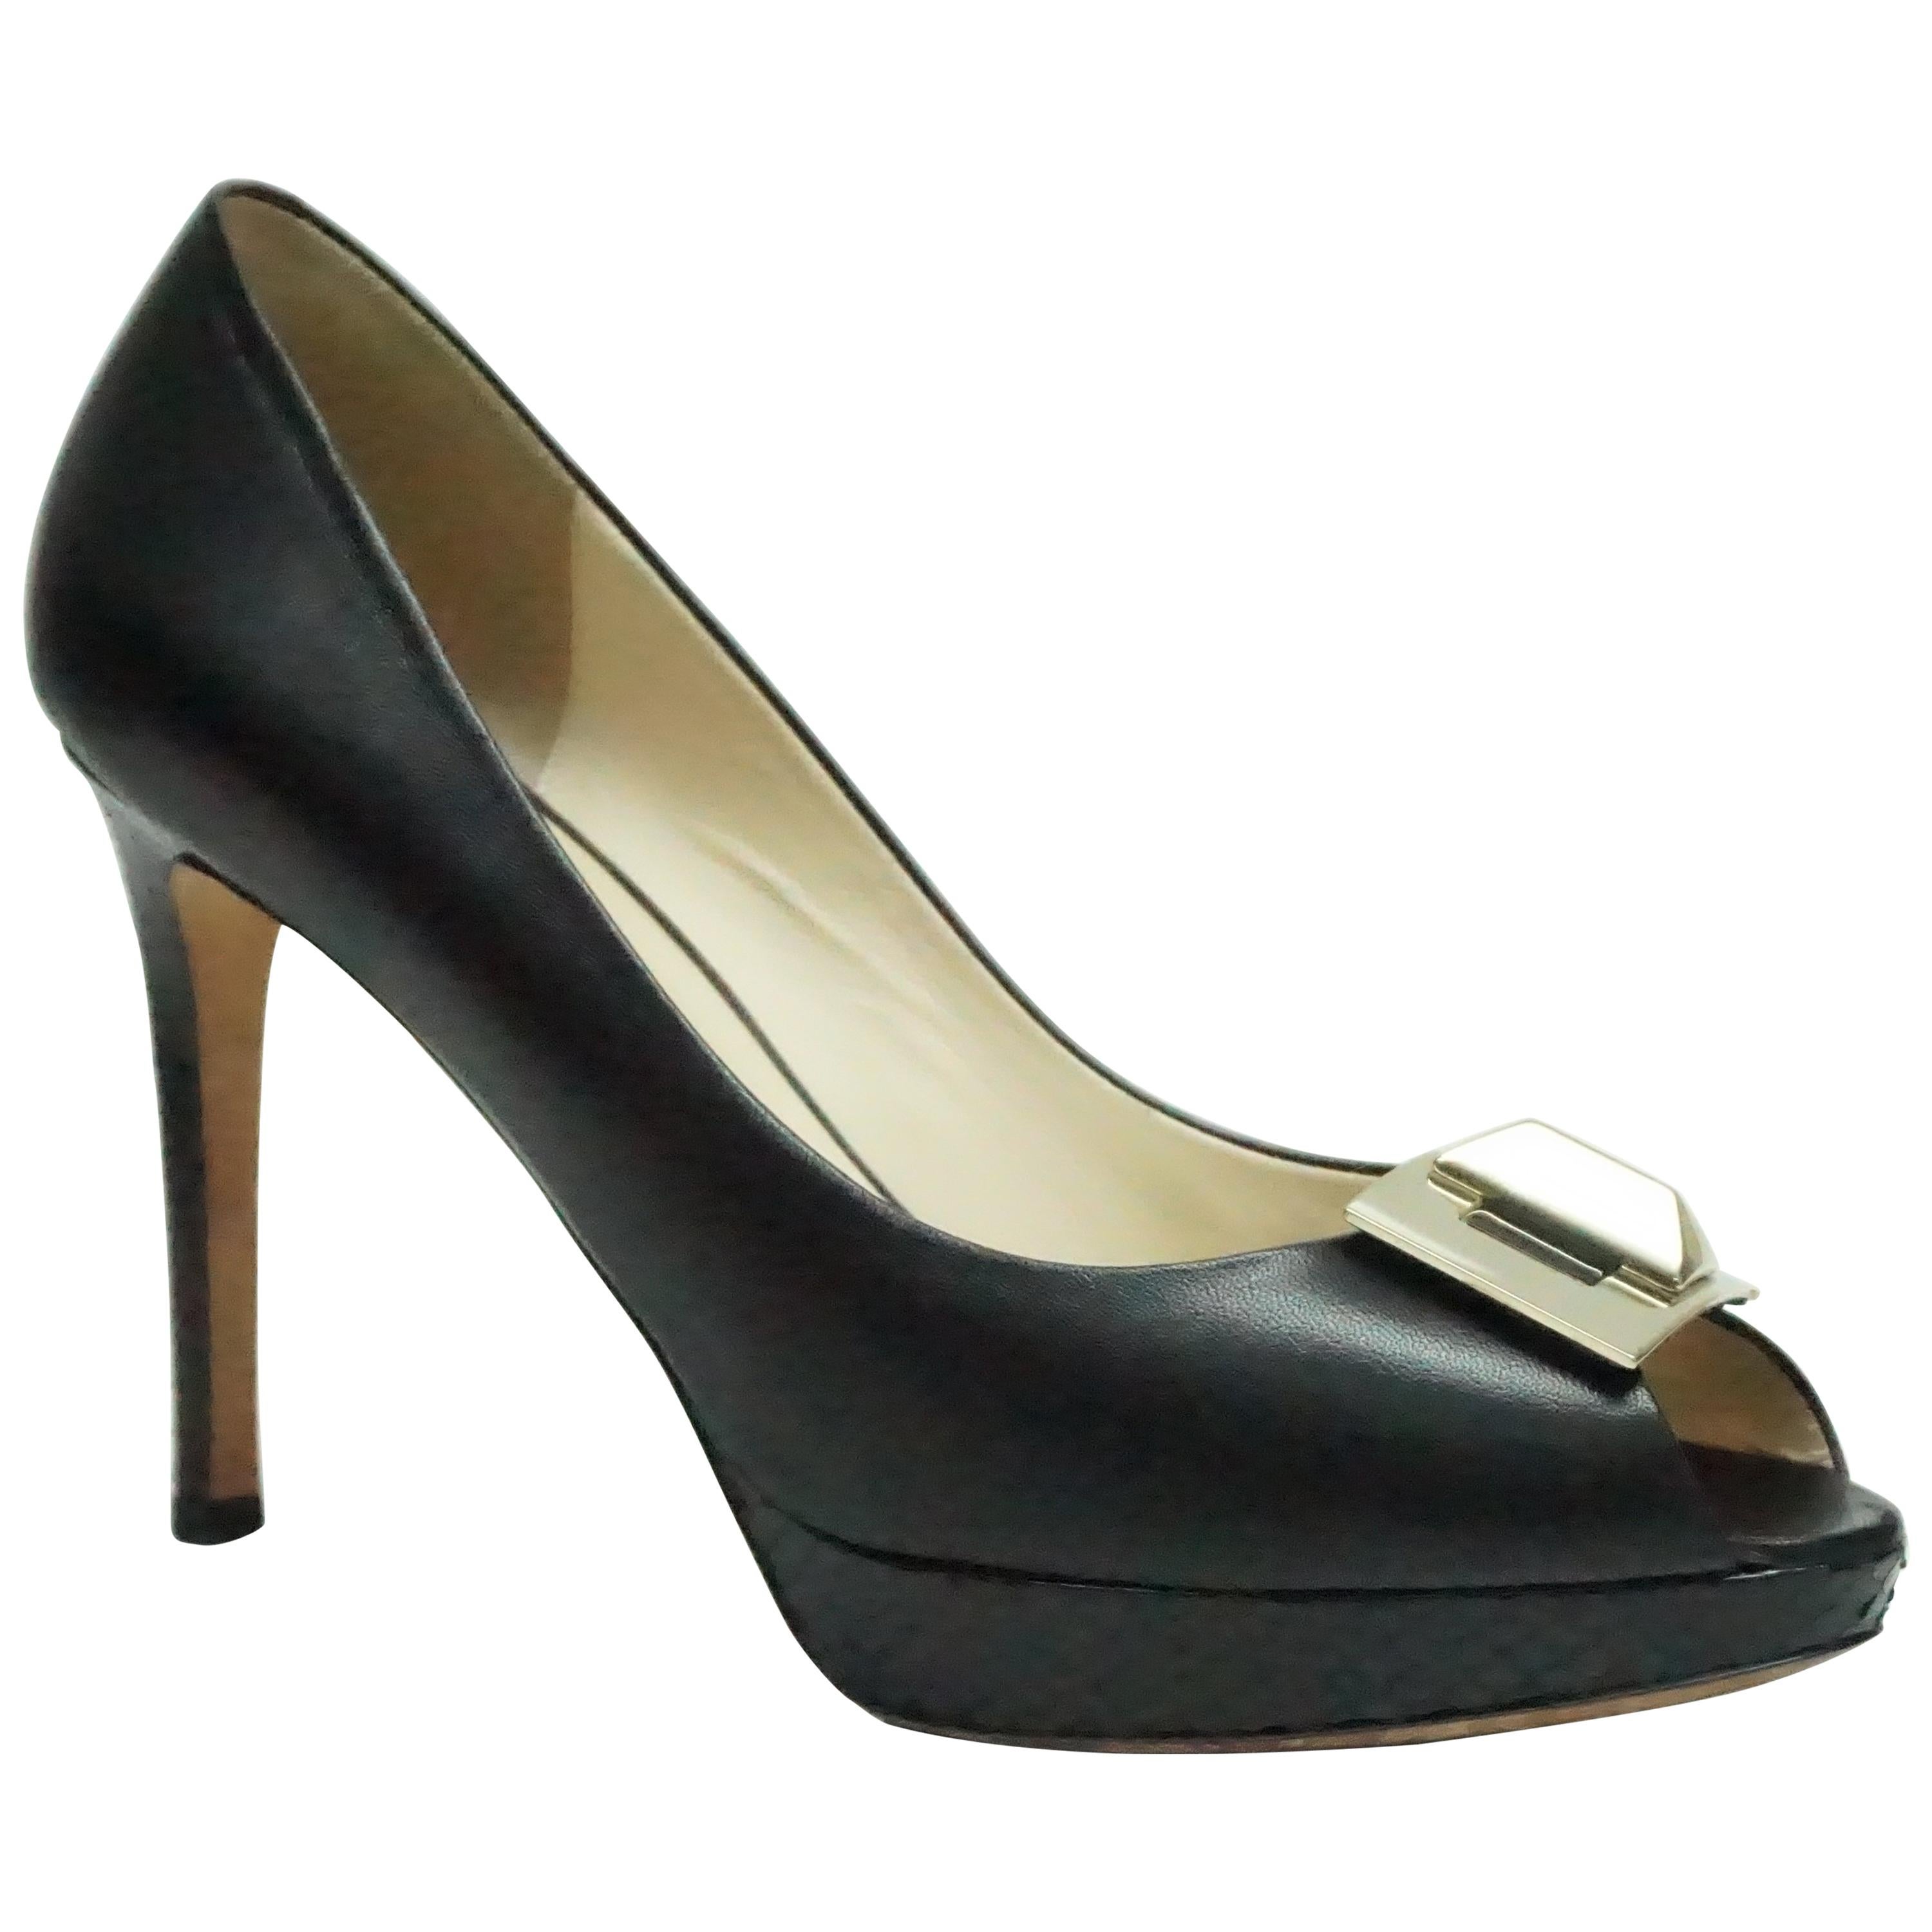 Emilio Pucci Peep Toe Black Shoe w/ Silver Embellishment  - 39